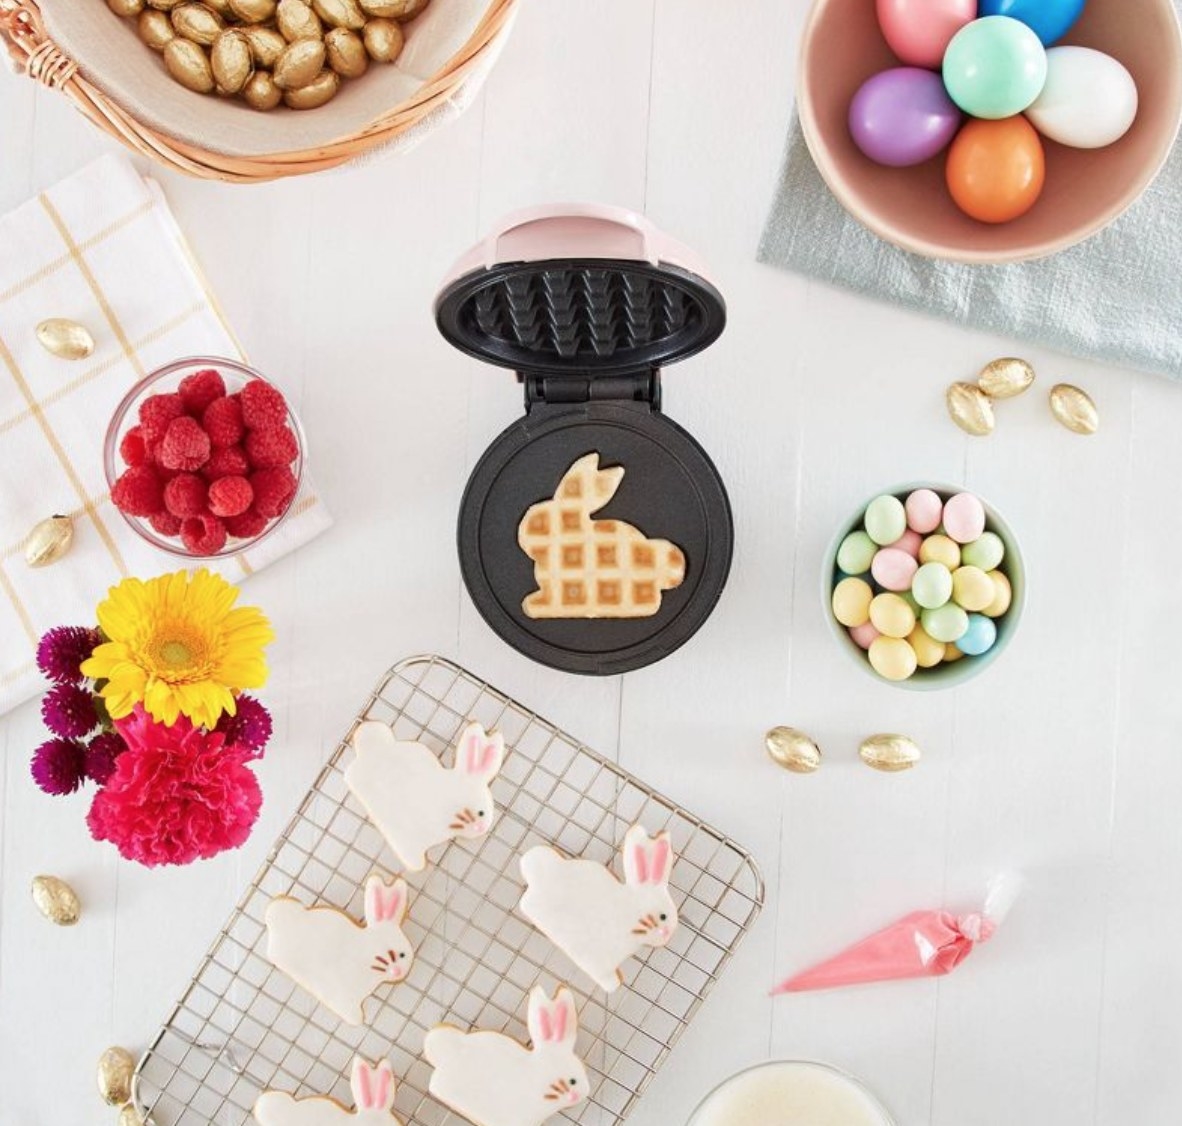 the bunny-shaped waffle maker